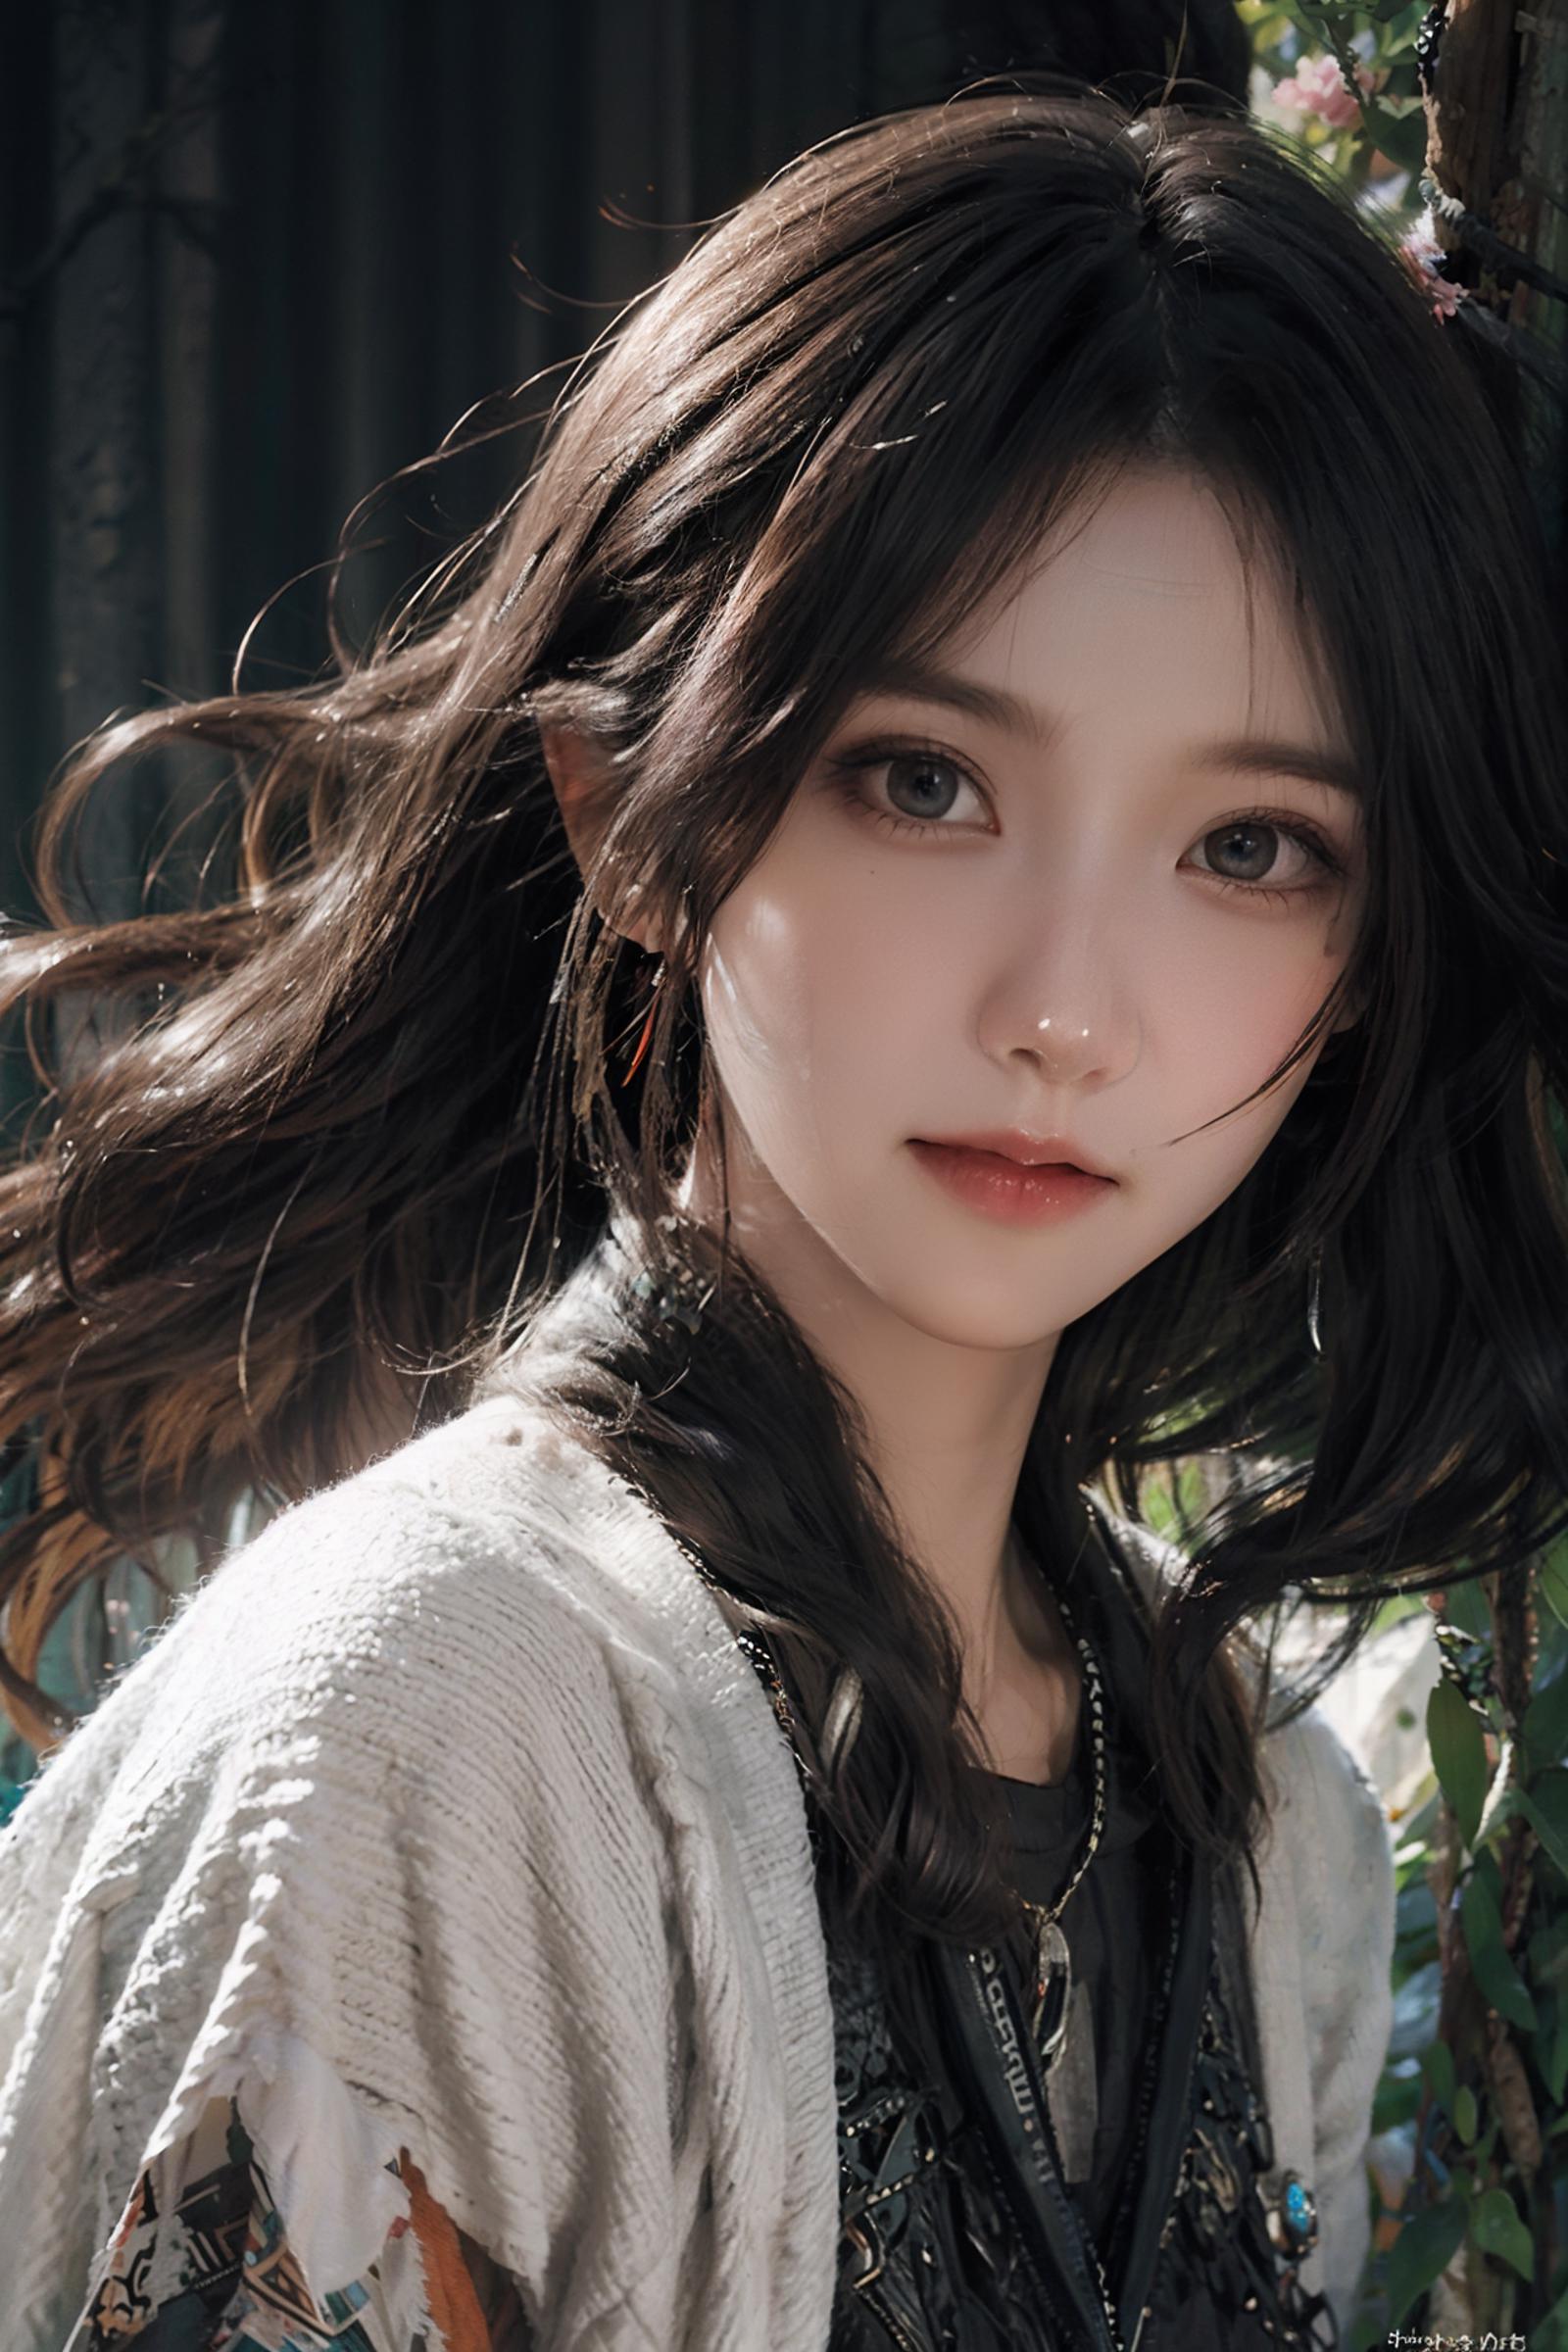 Asian girls face image by DarkTera